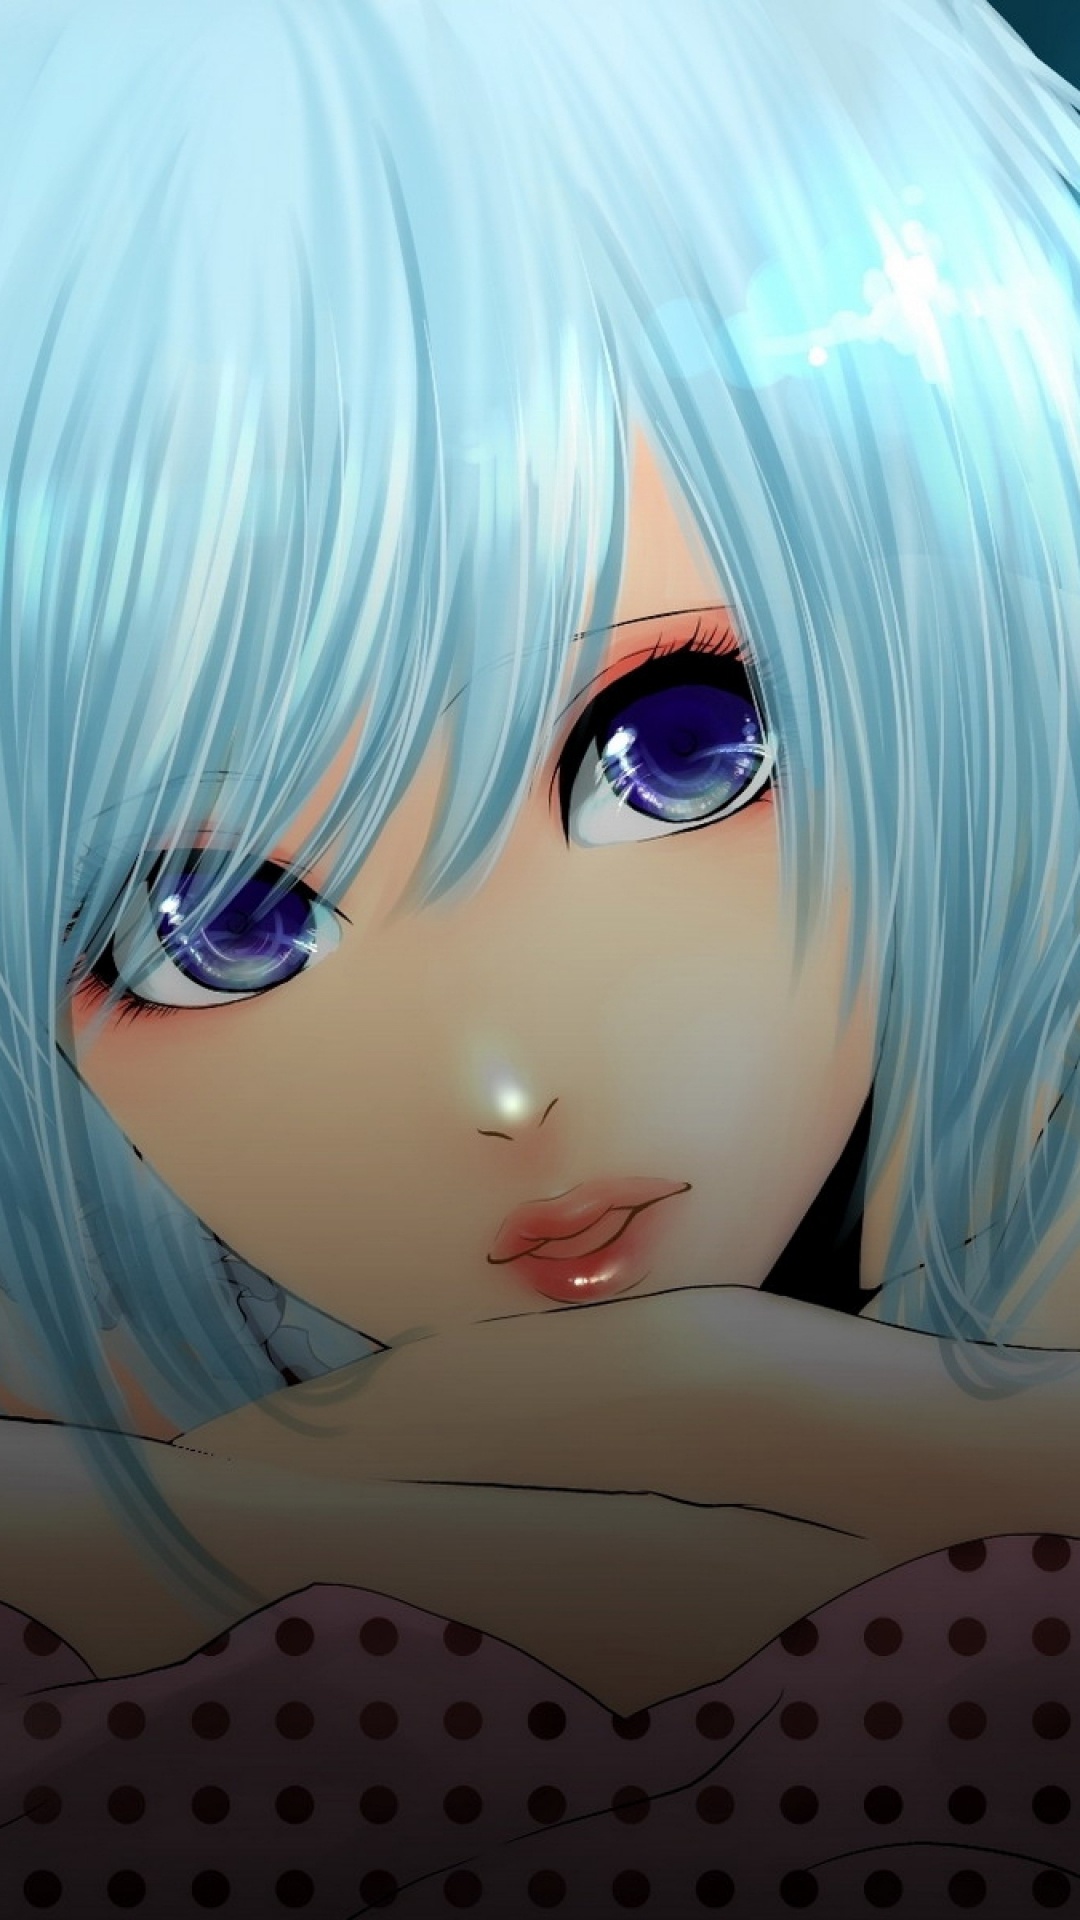 Personaje de Anime Femenino de Pelo Azul. Wallpaper in 1080x1920 Resolution